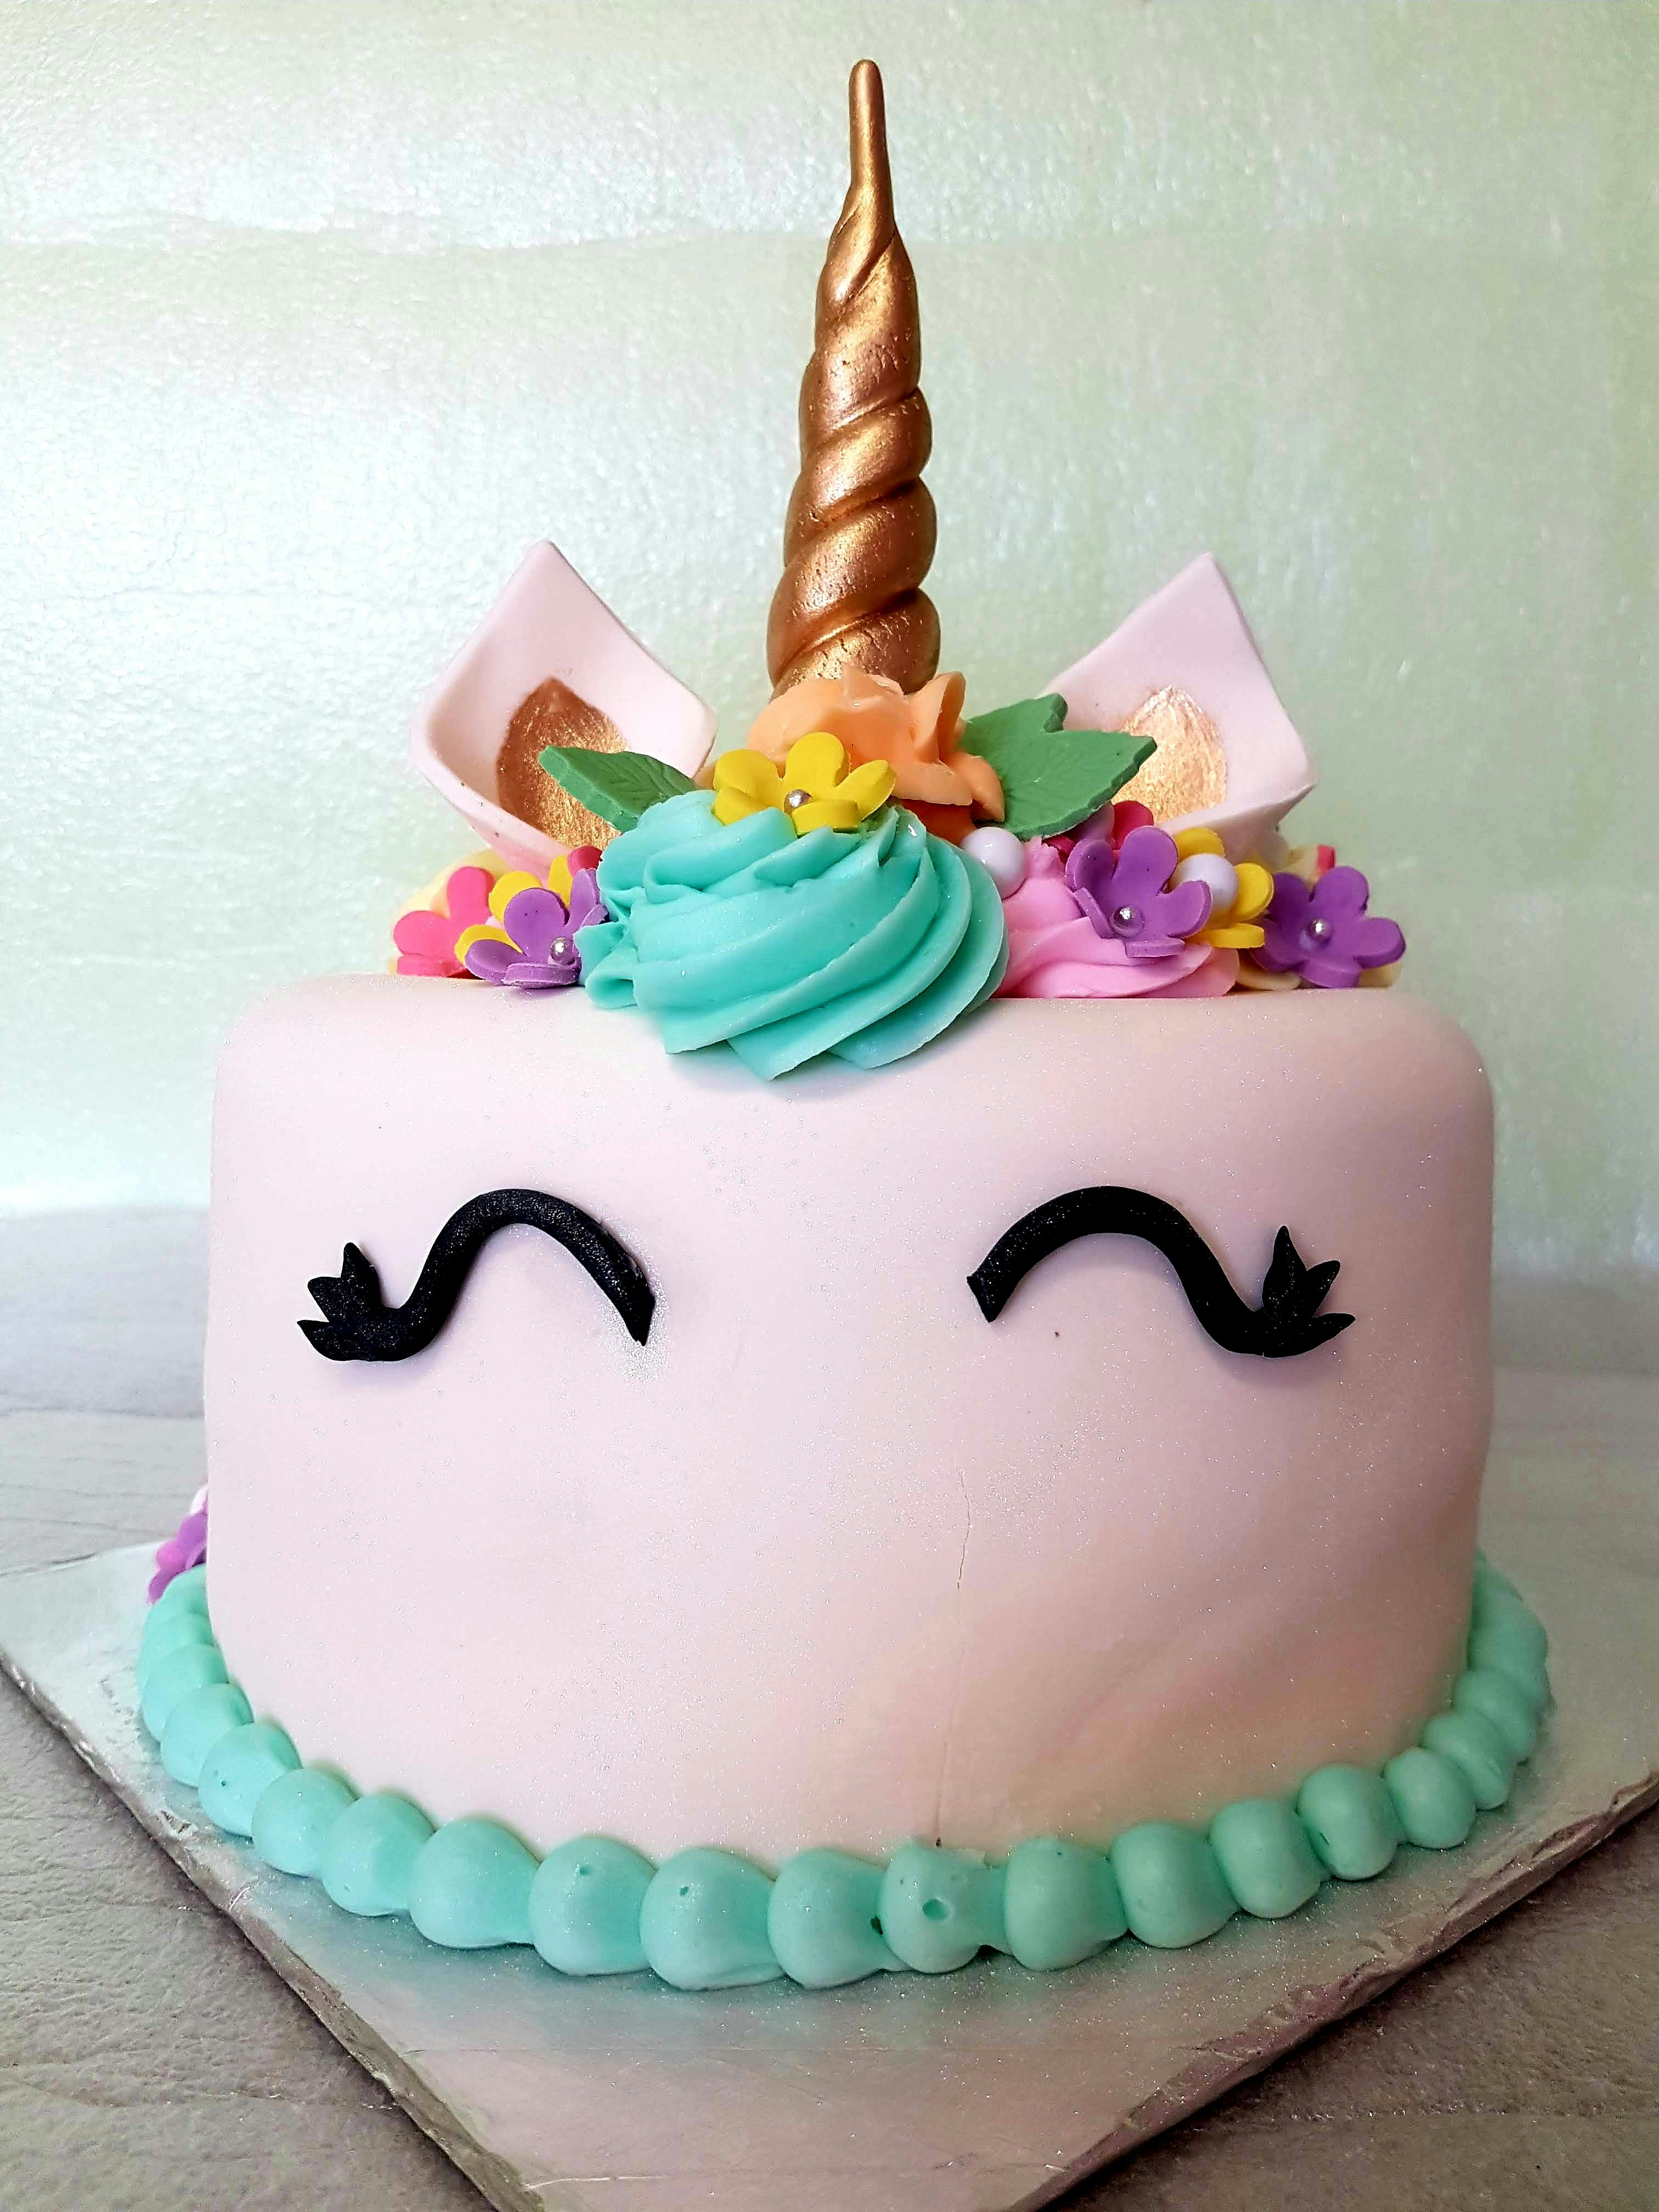 Free stock photo of #cake #dessert Unicorn